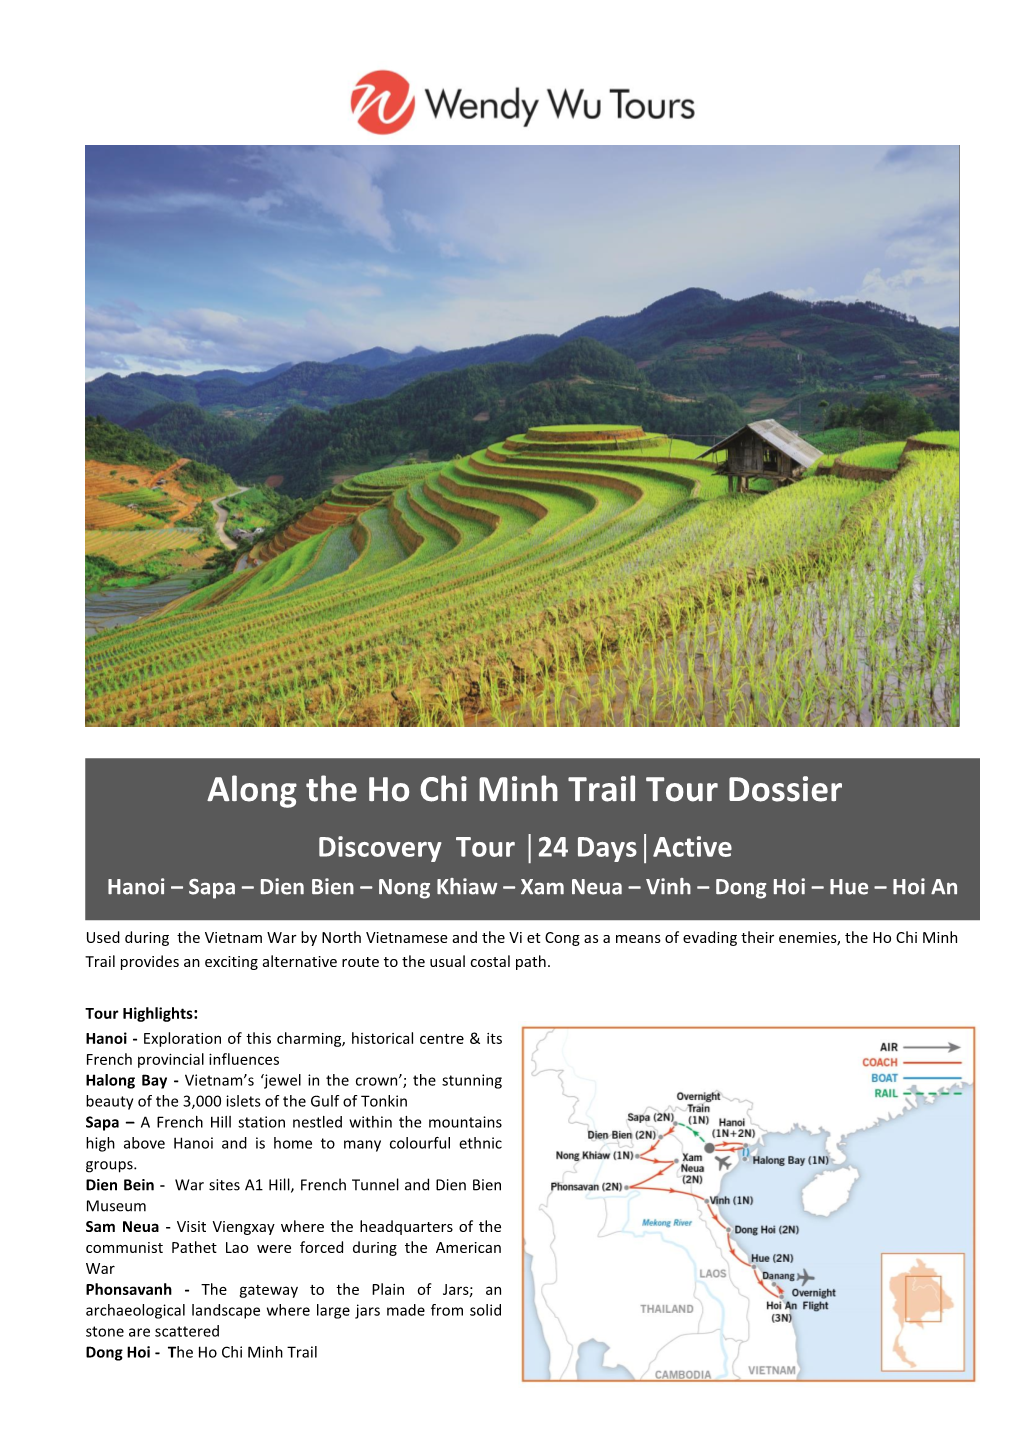 Along the Ho Chi Minh Trail Tour Dossier Discovery Tour │24 Days│Active Hanoi – Sapa – Dien Bien – Nong Khiaw – Xam Neua – Vinh – Dong Hoi – Hue – Hoi An